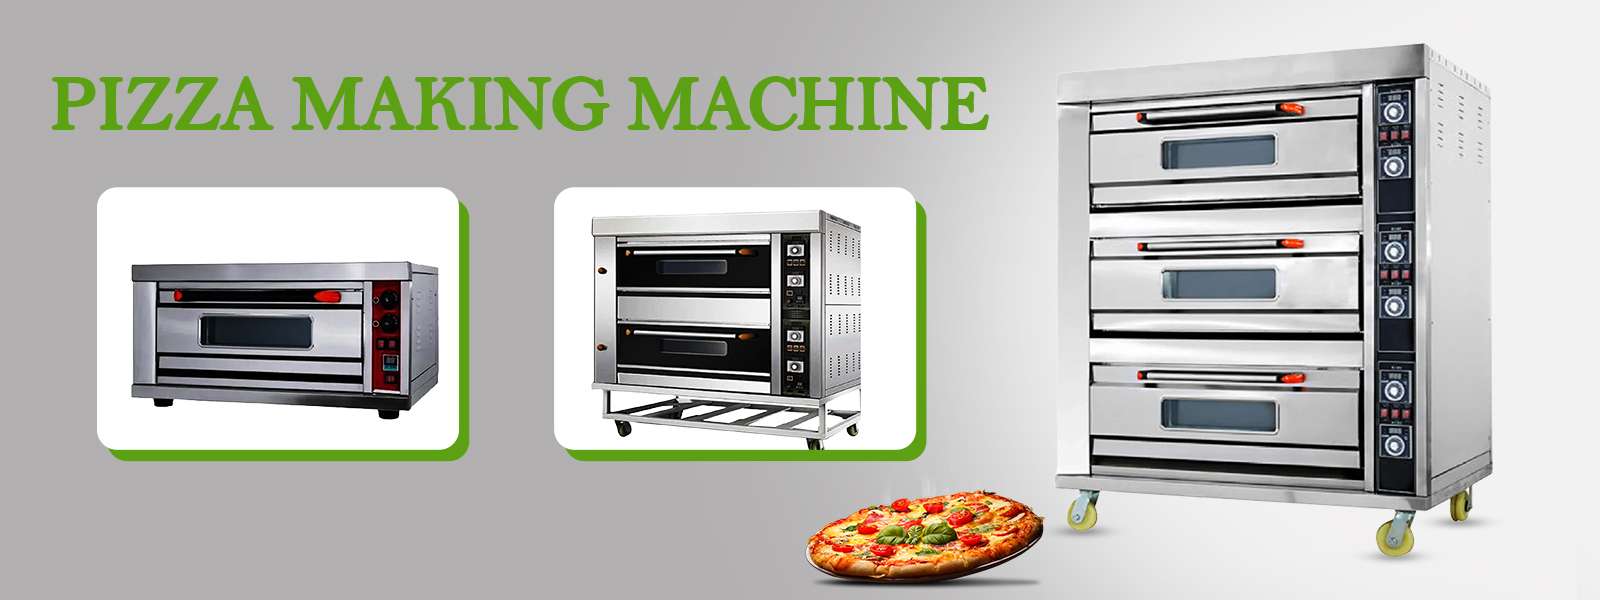 Pizza Making Machine - Foodmart Agro Engineering